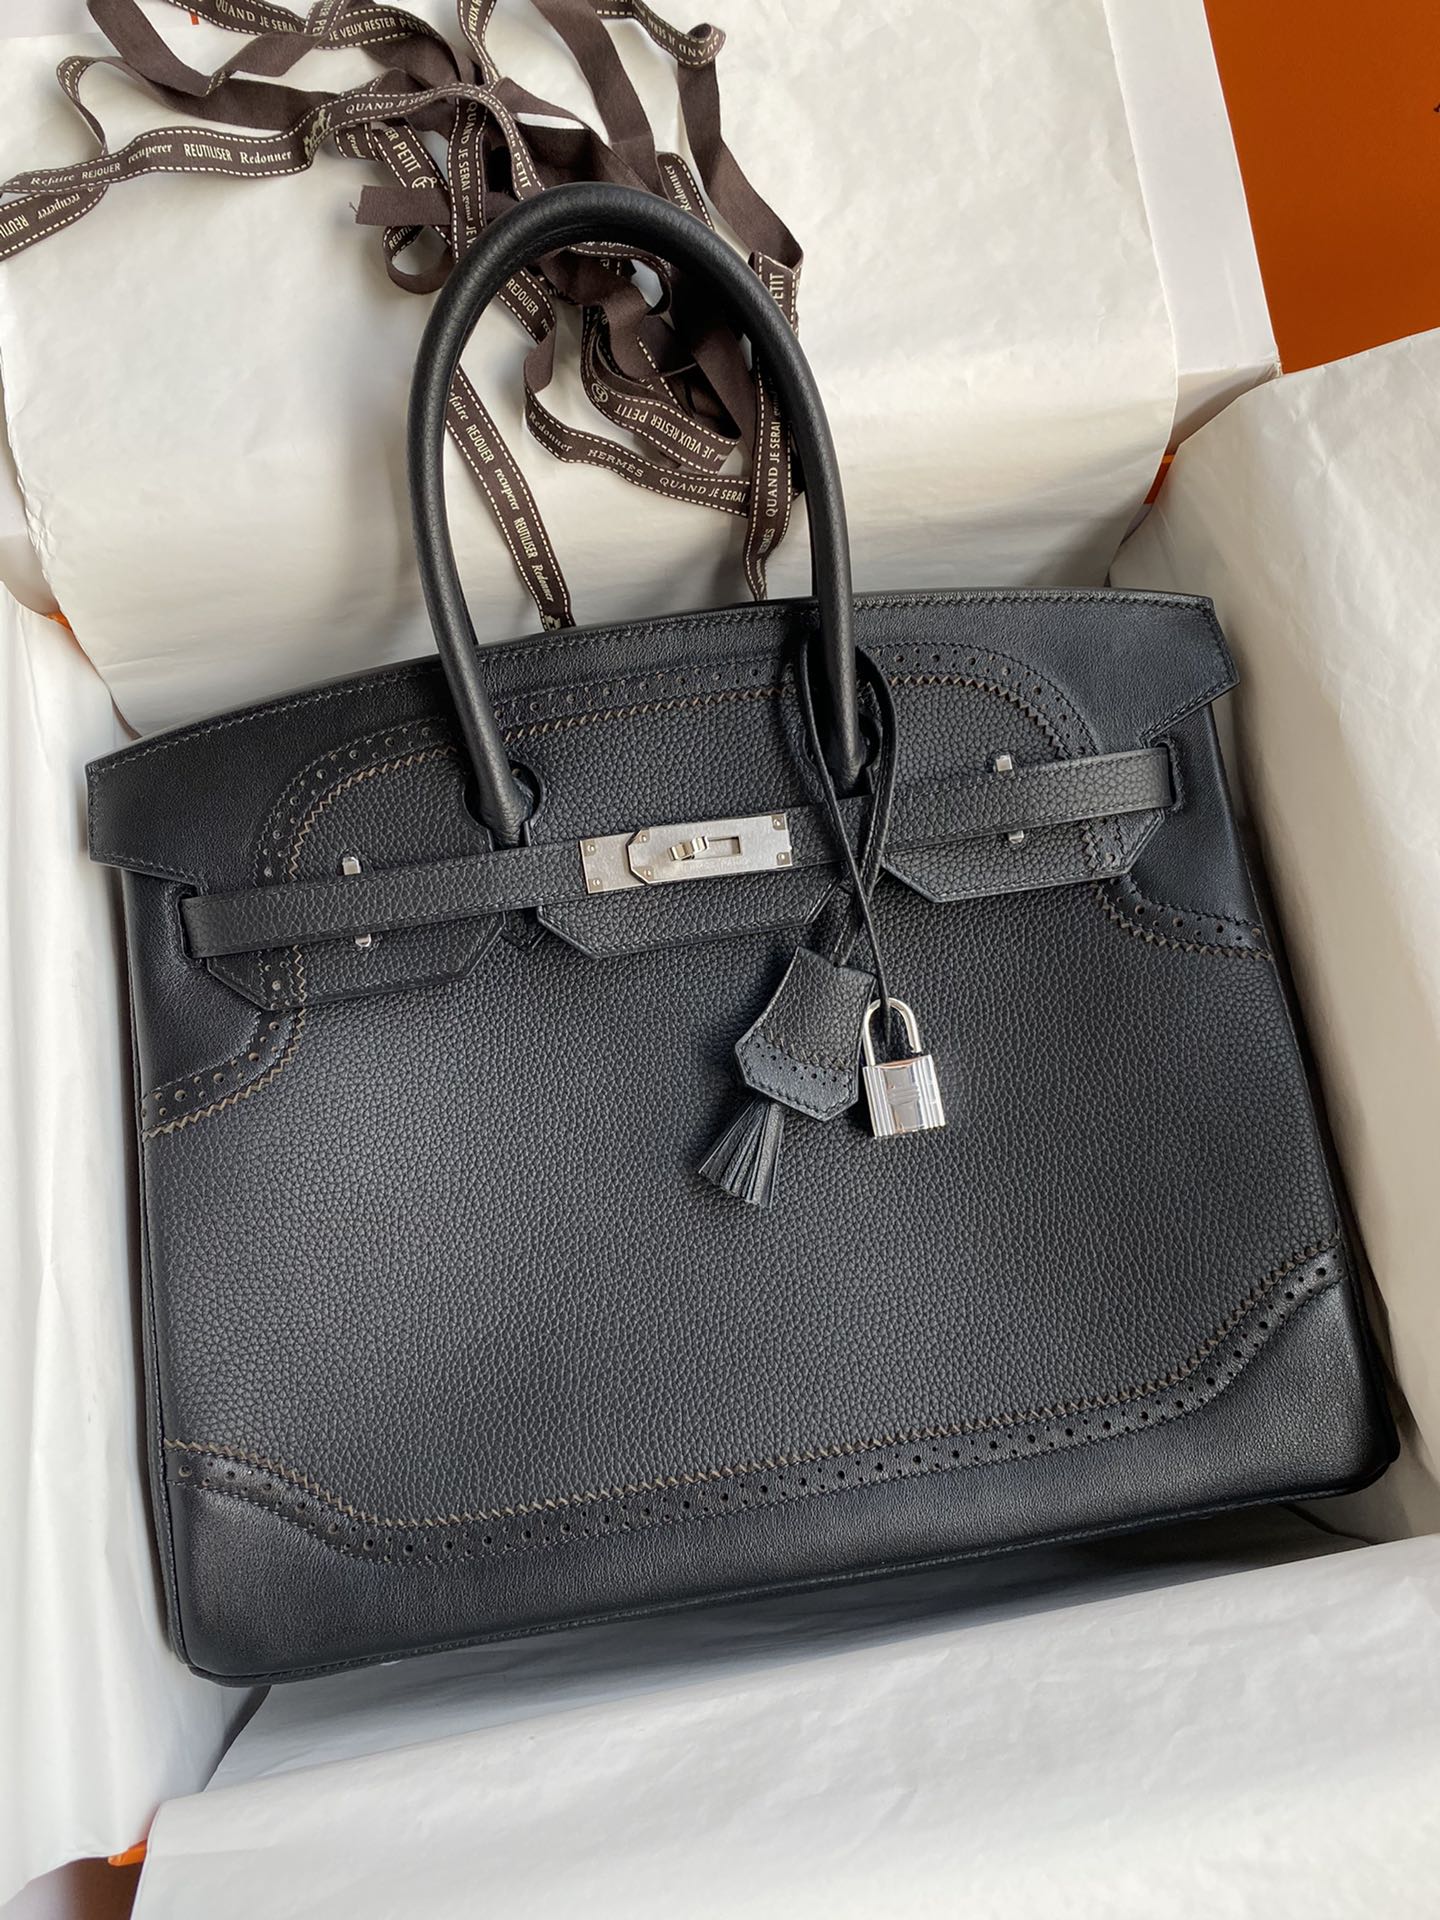 Hermes Birkin Bags Handbags Black Silver Hardware Lace